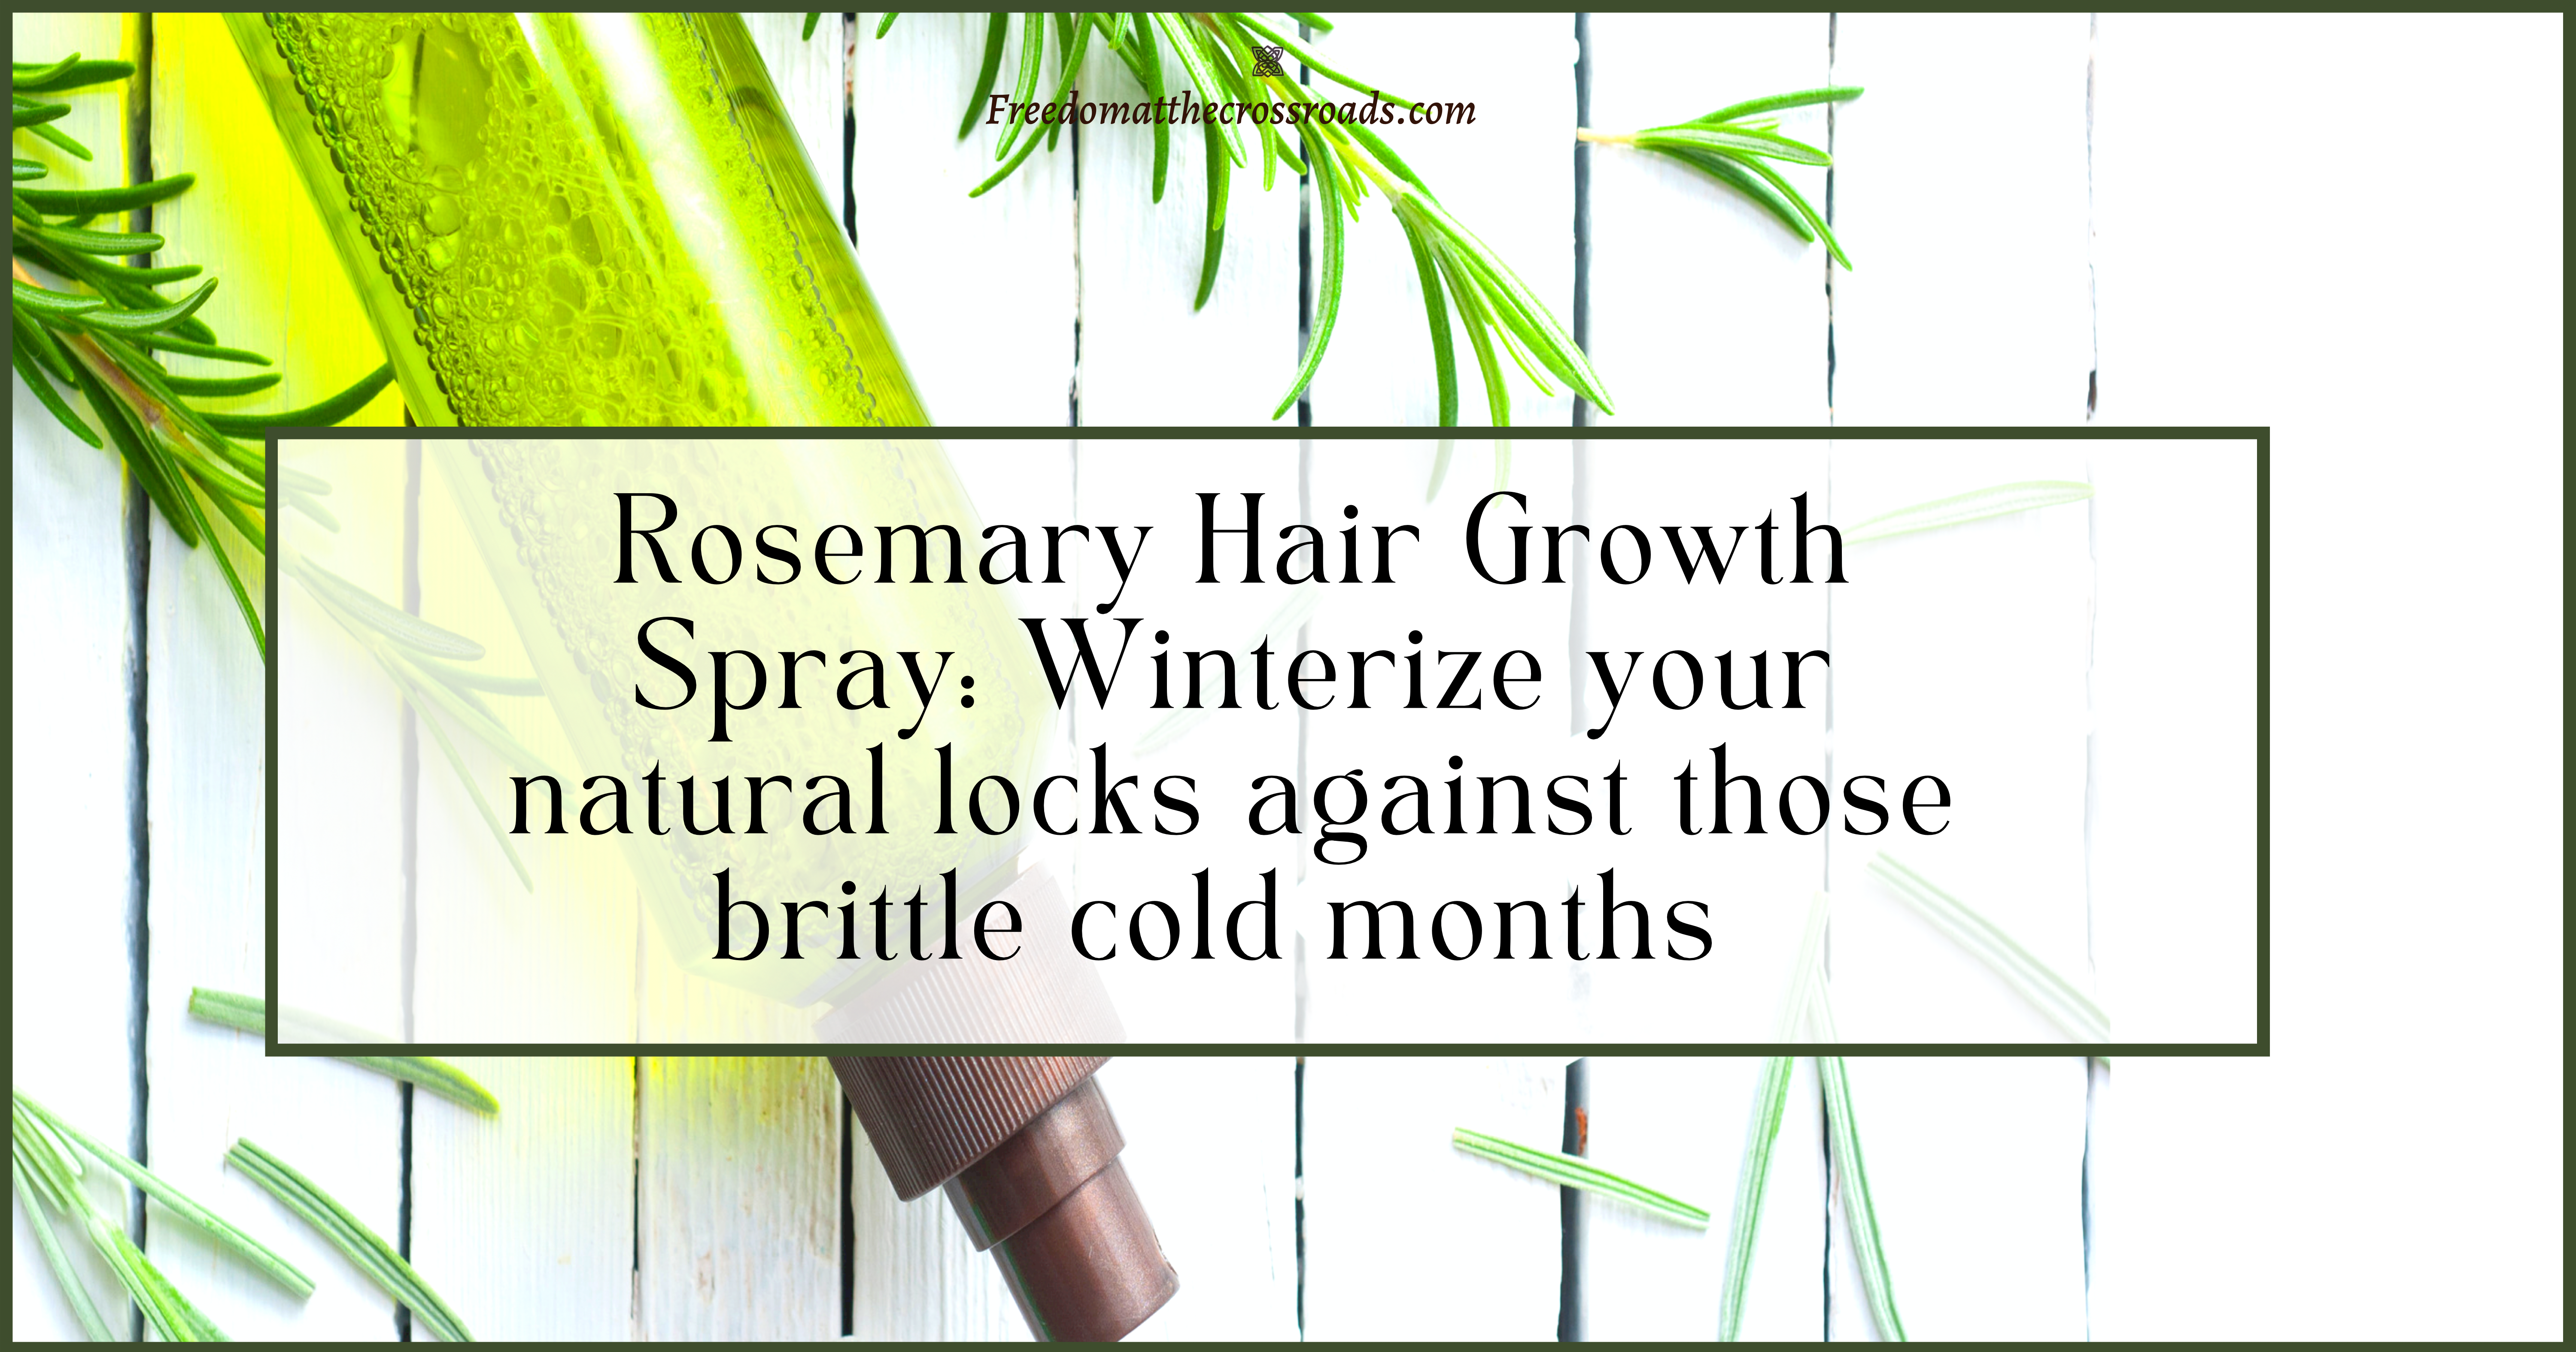 Rosemary hair growth spray blog post image